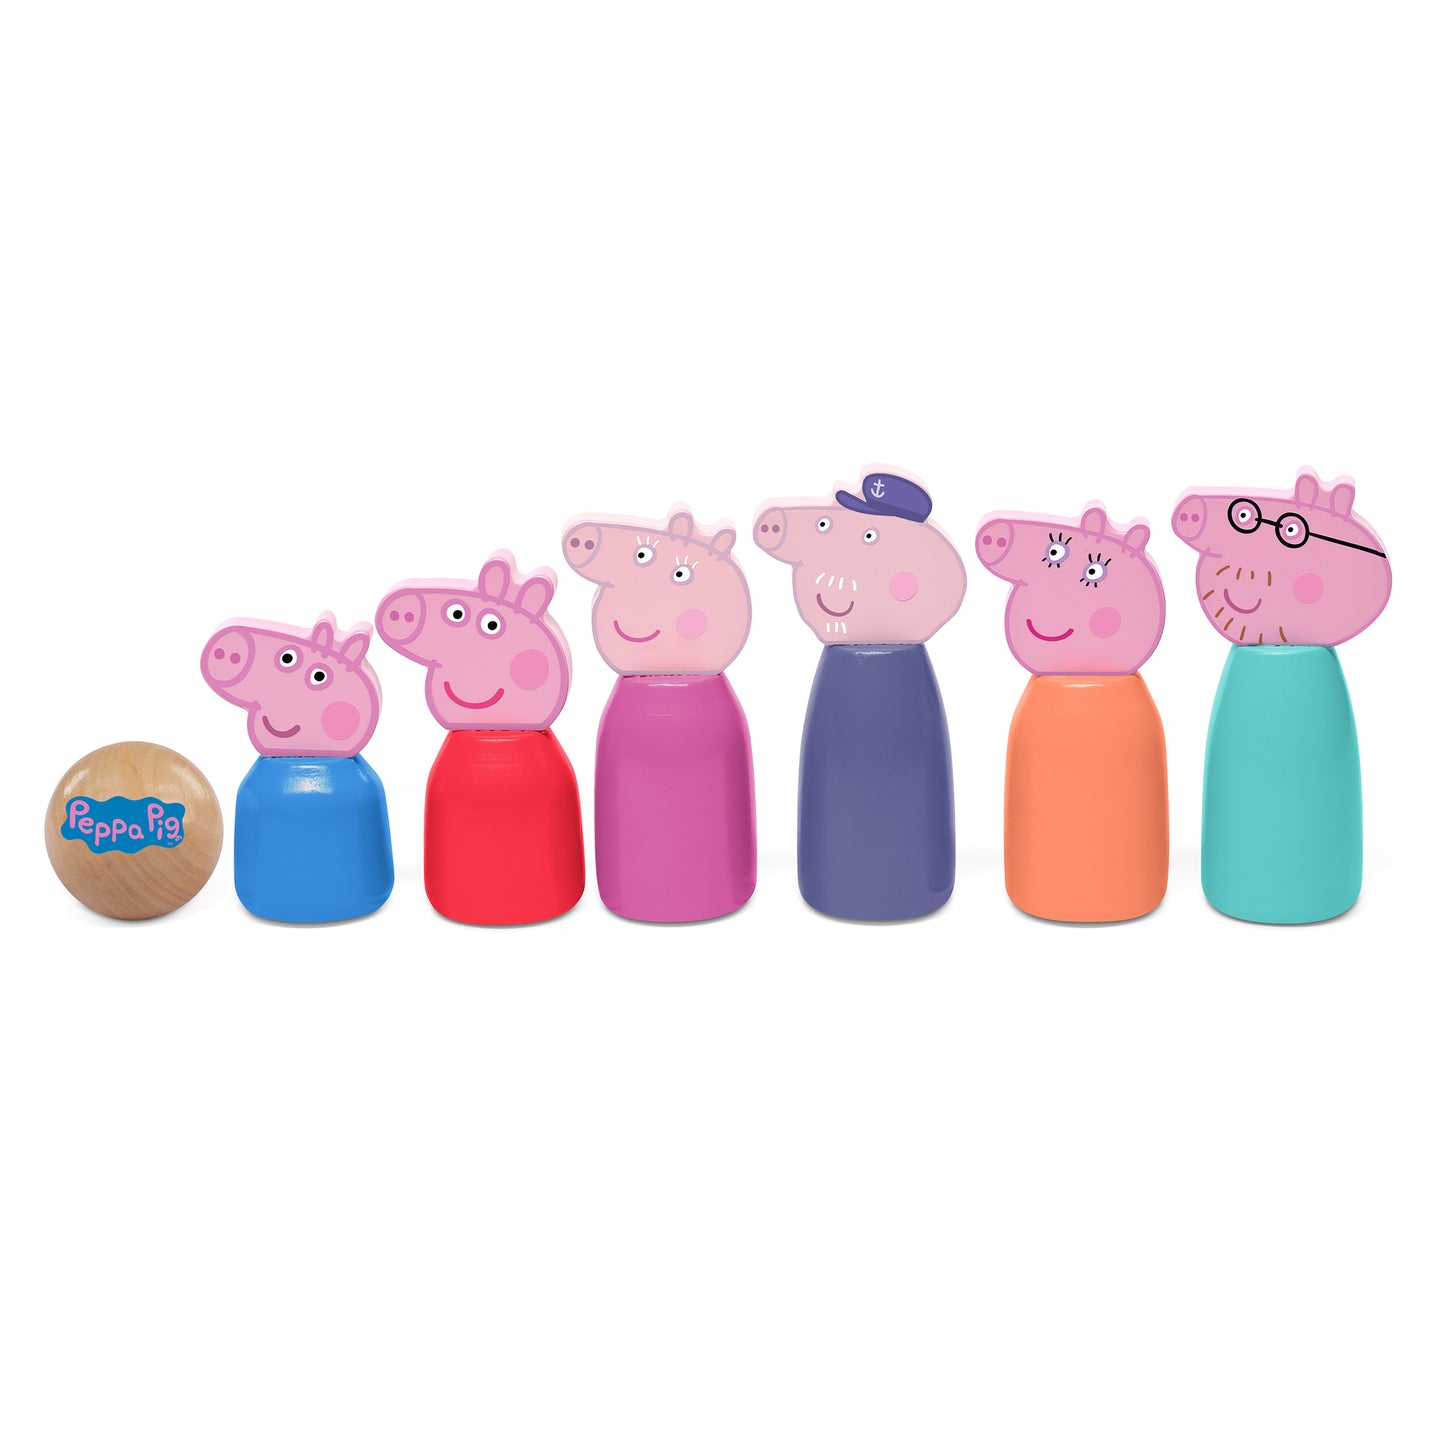 Peppa Pig Character Skittles